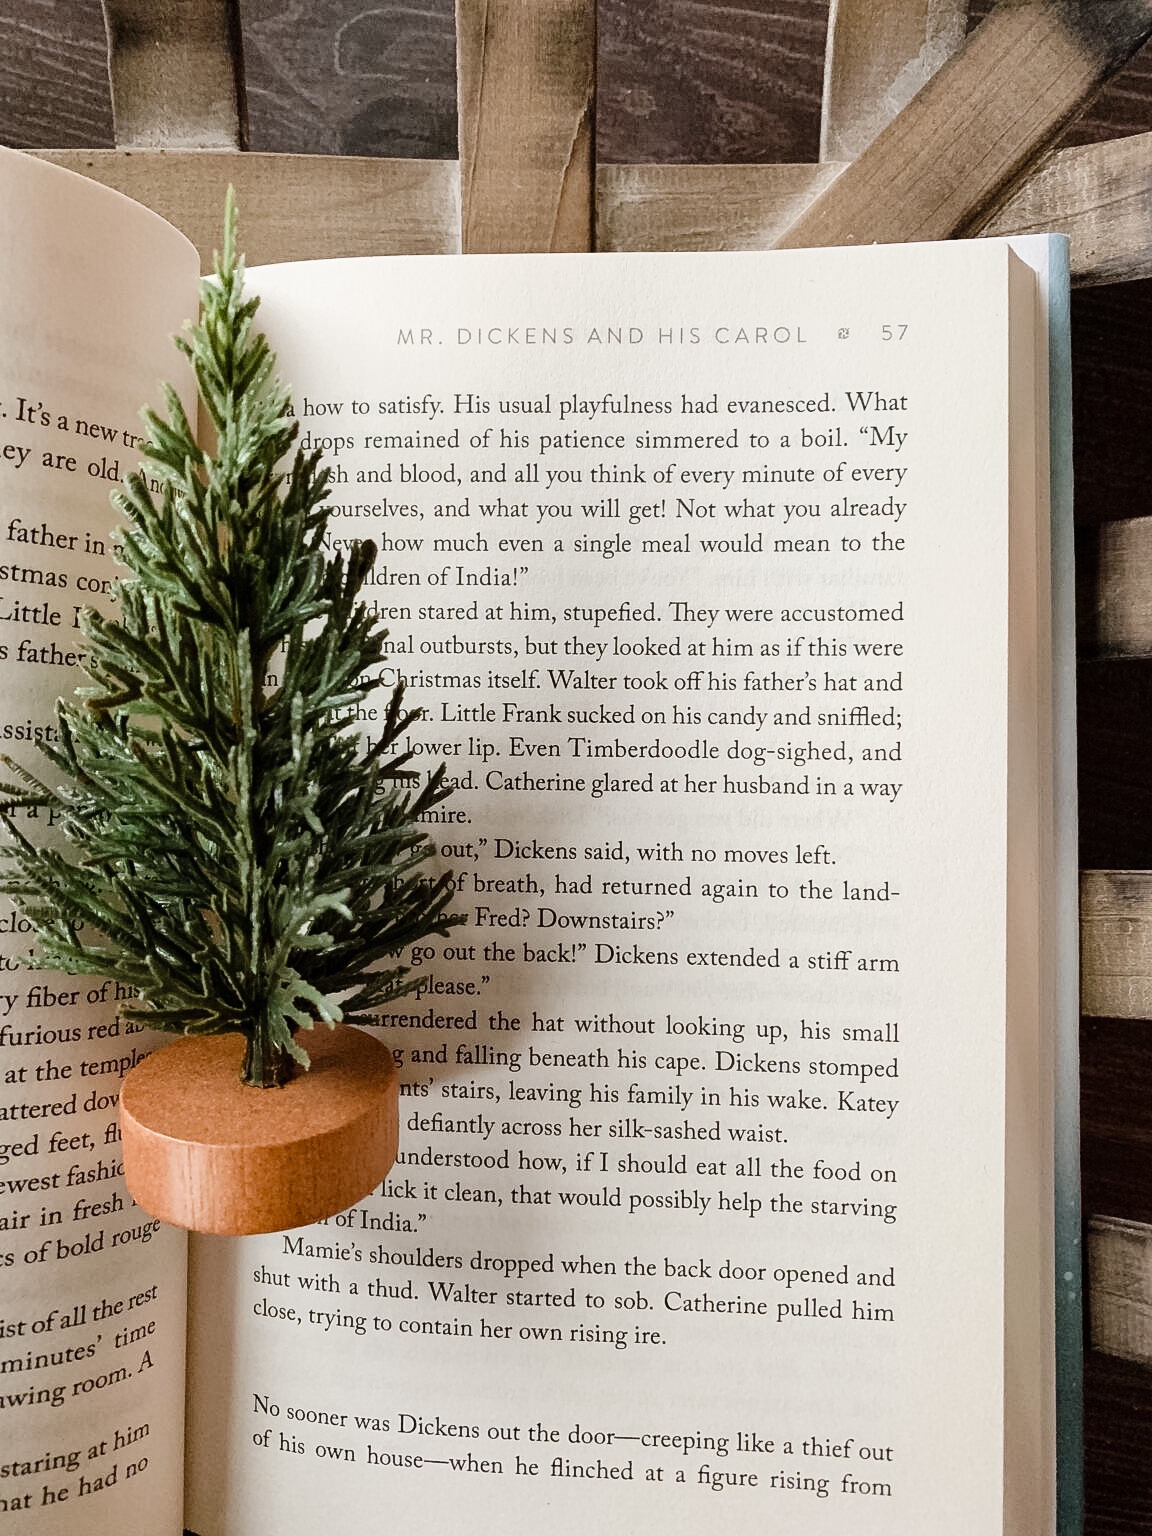 Image of small Christmas tree inside holiday book